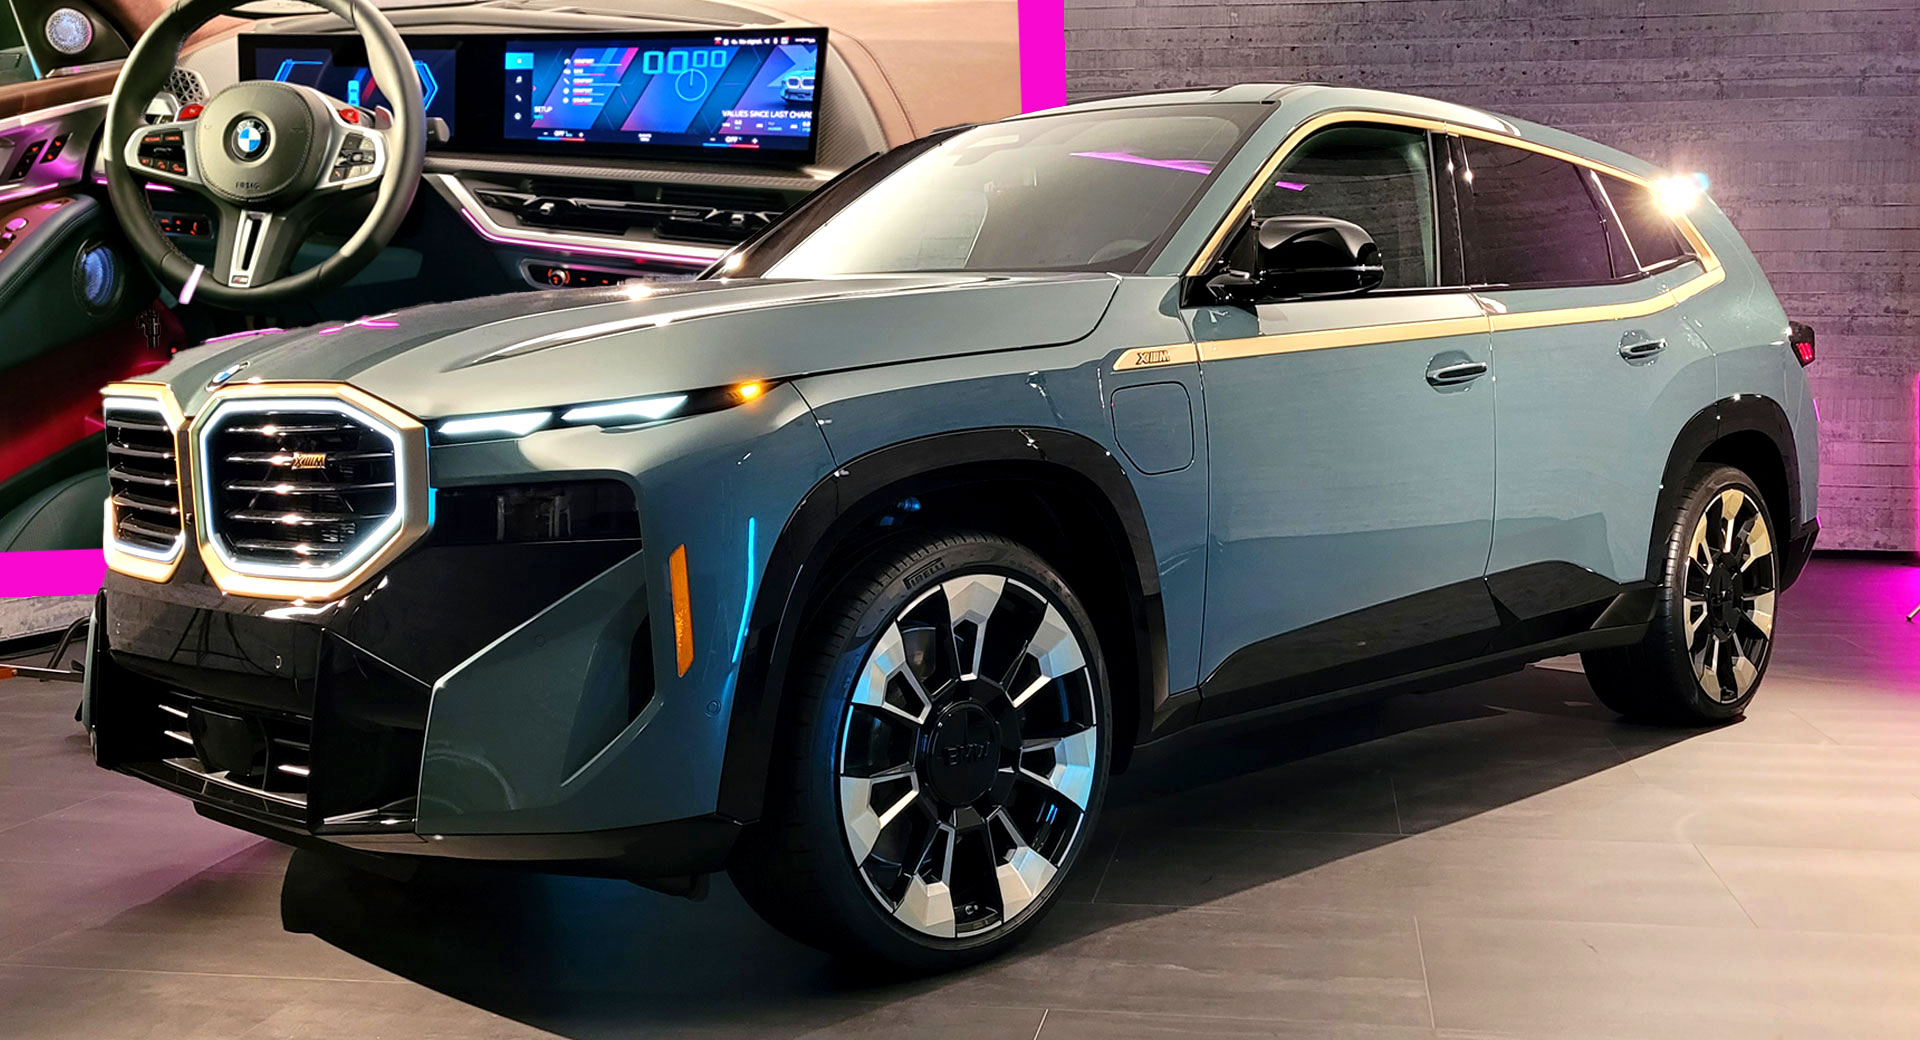 We Get Up Close To The 2023 BMW XM PlugIn Hybrid SUV Cars News Magazine